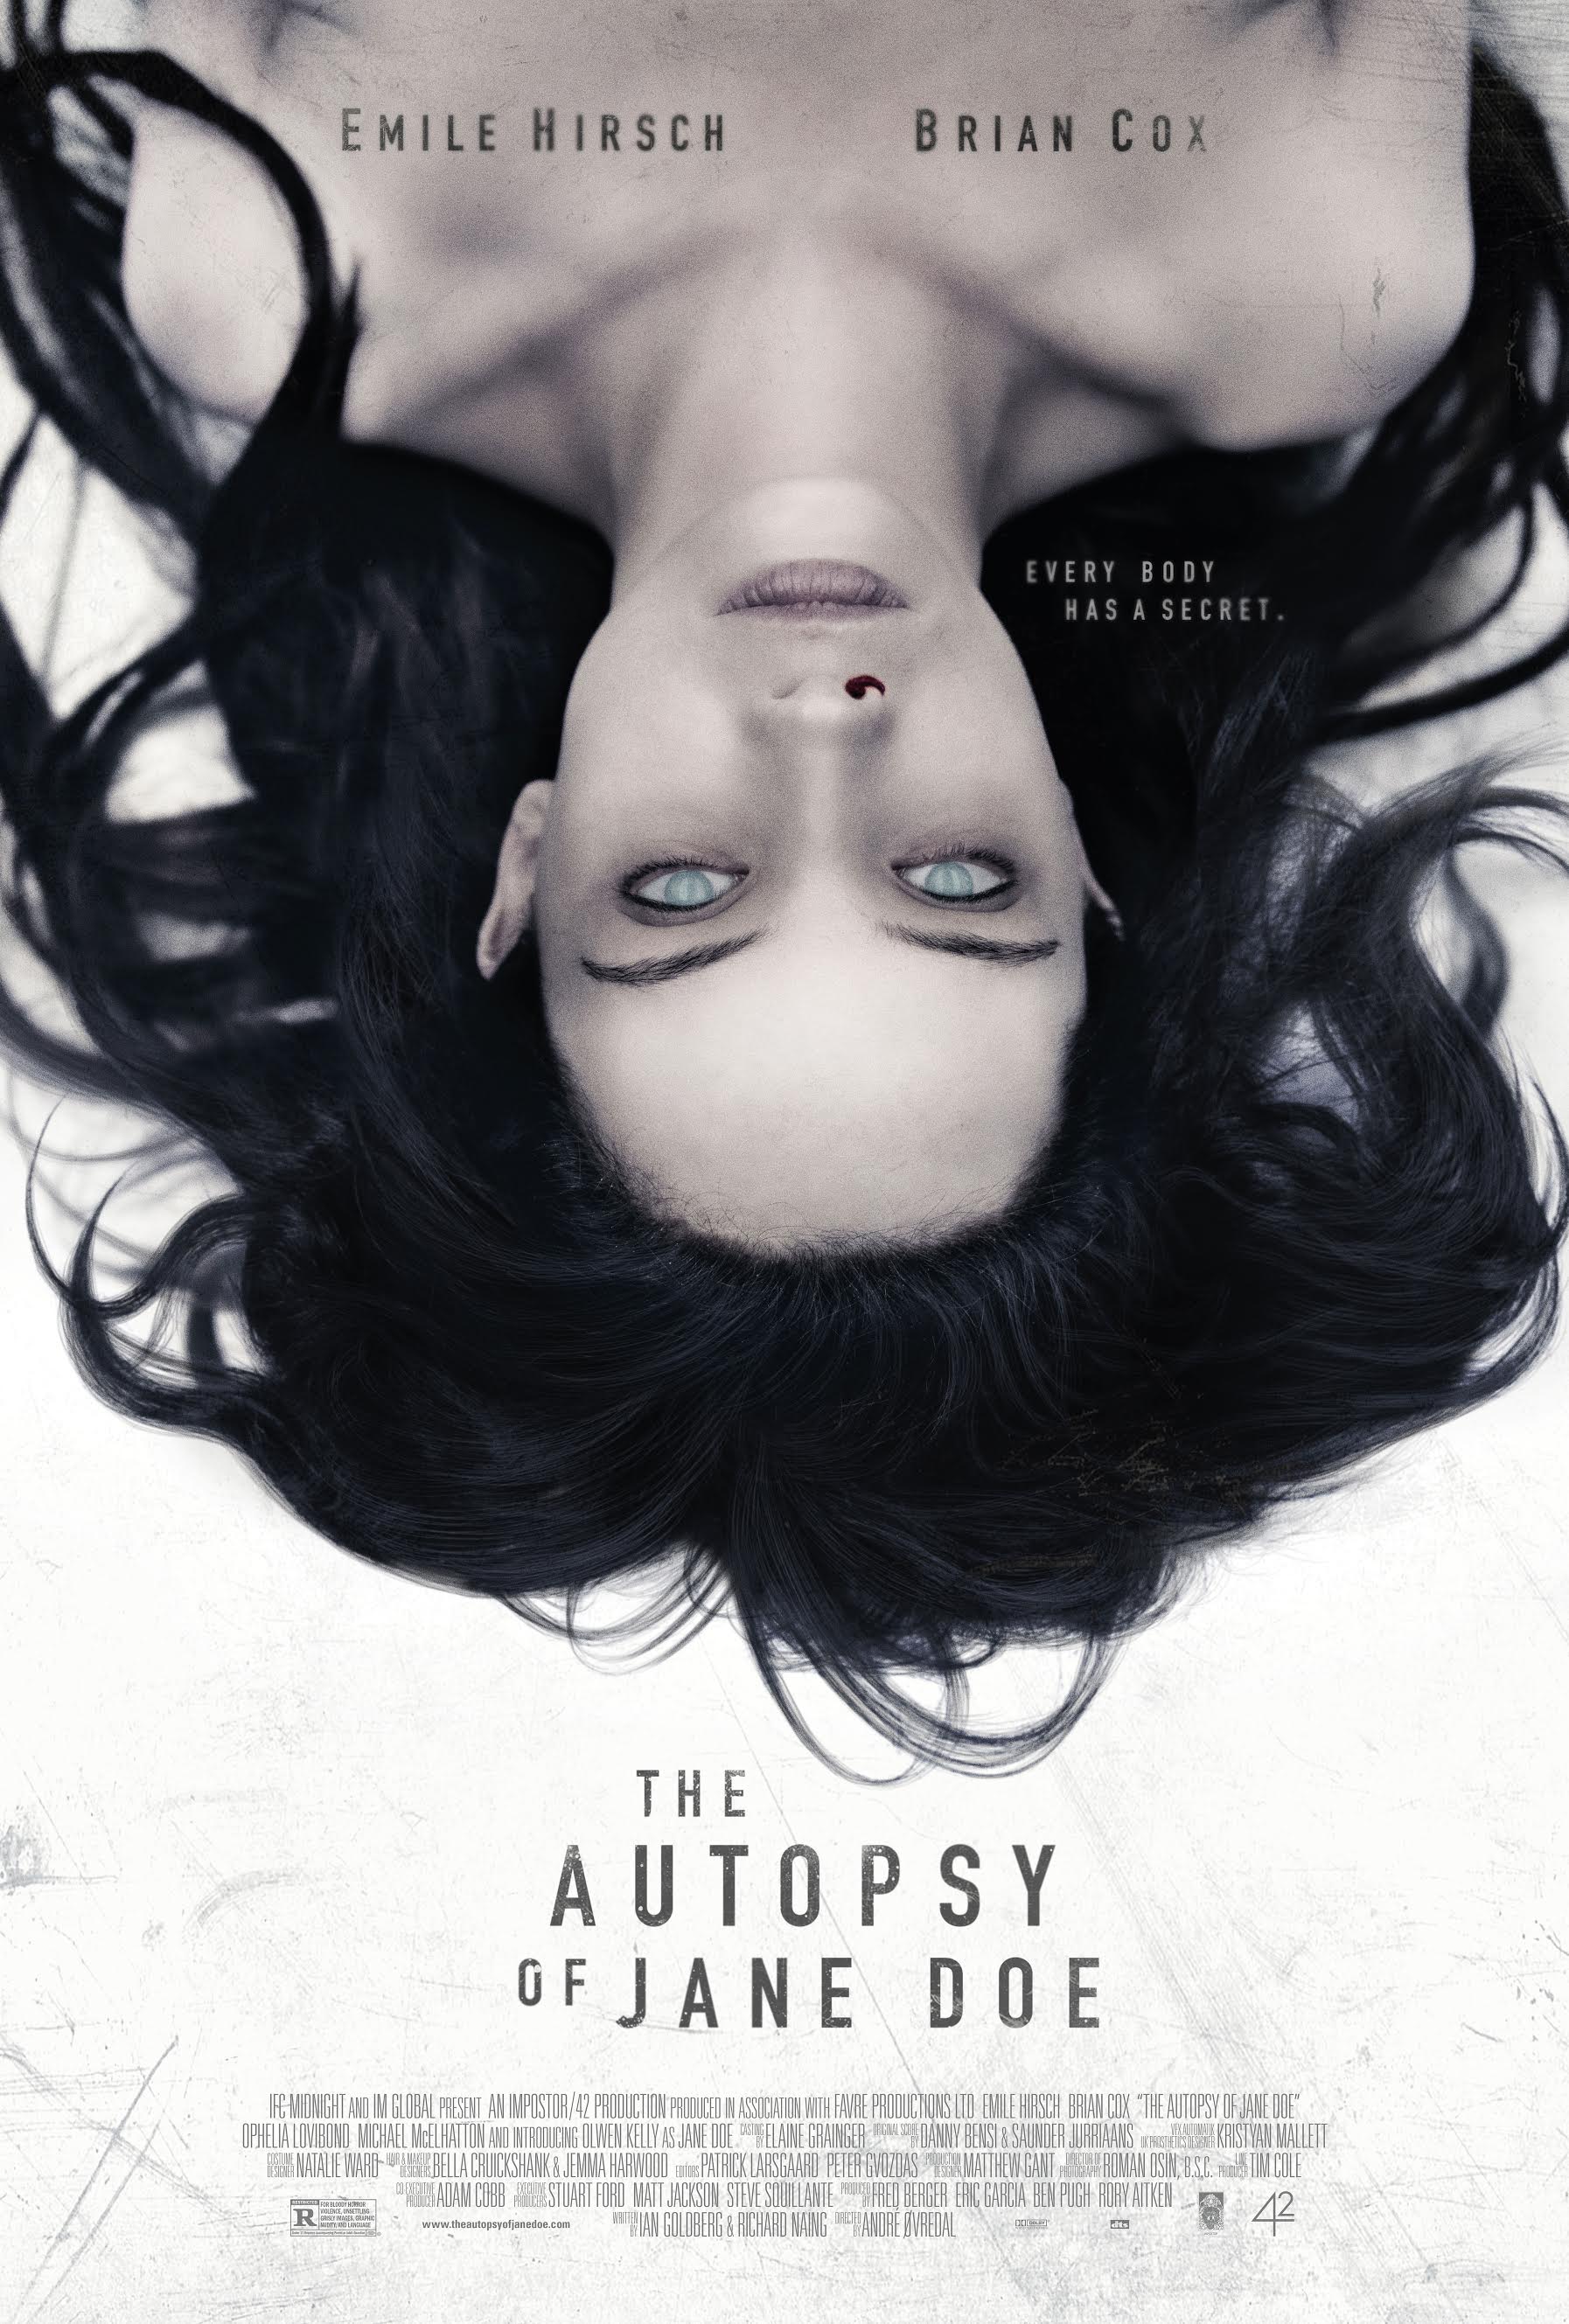 Nonton film The Autopsy of Jane Doe layarkaca21 indoxx1 ganool online streaming terbaru